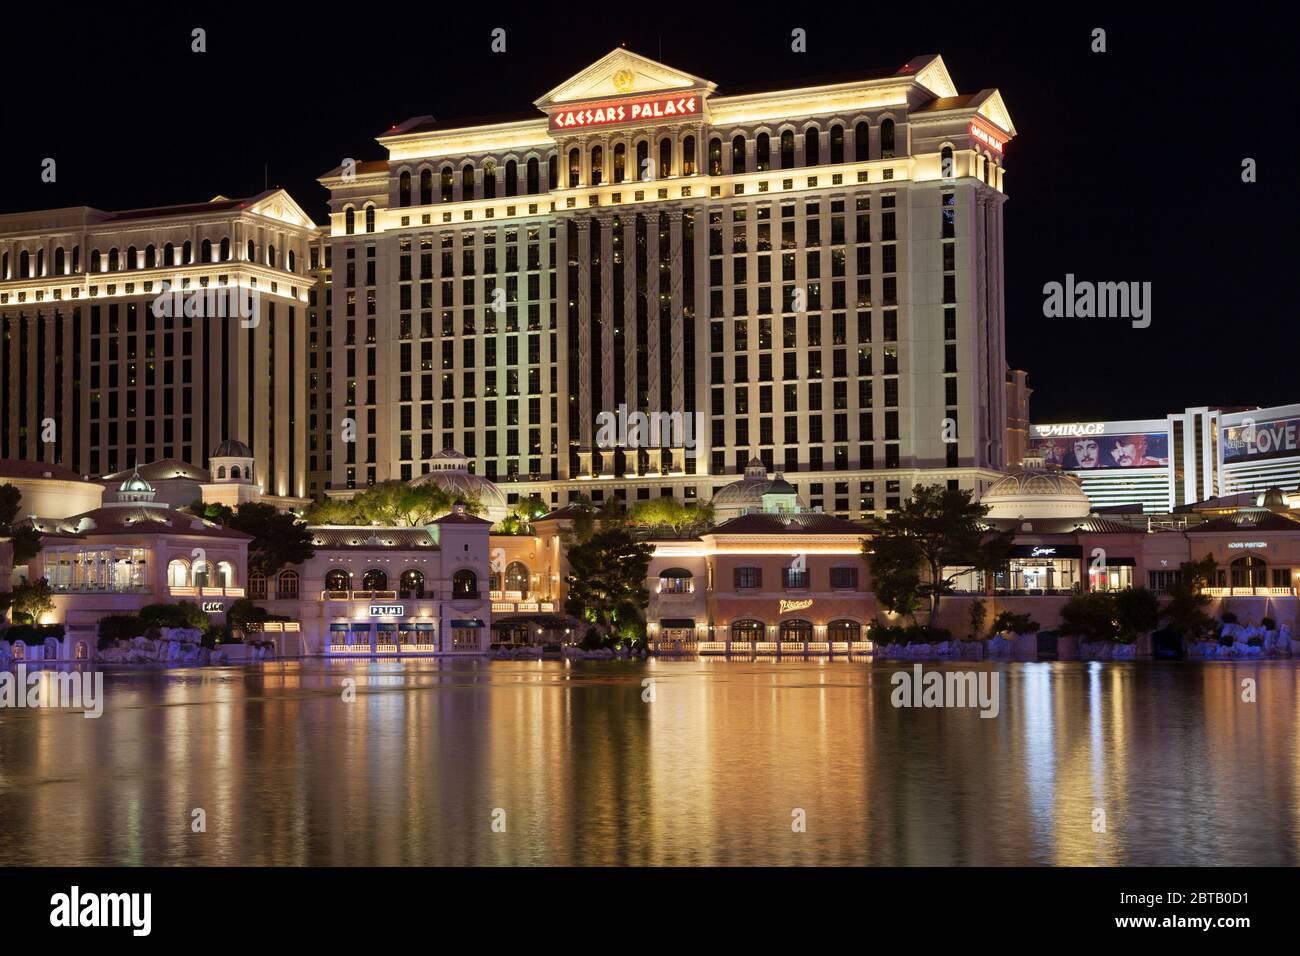 Las Vegas, Nevada - August 29, 2019: Caesars Palace Hotel and Casino at night in Las Vegas, Nevada, United States. Stock Photo